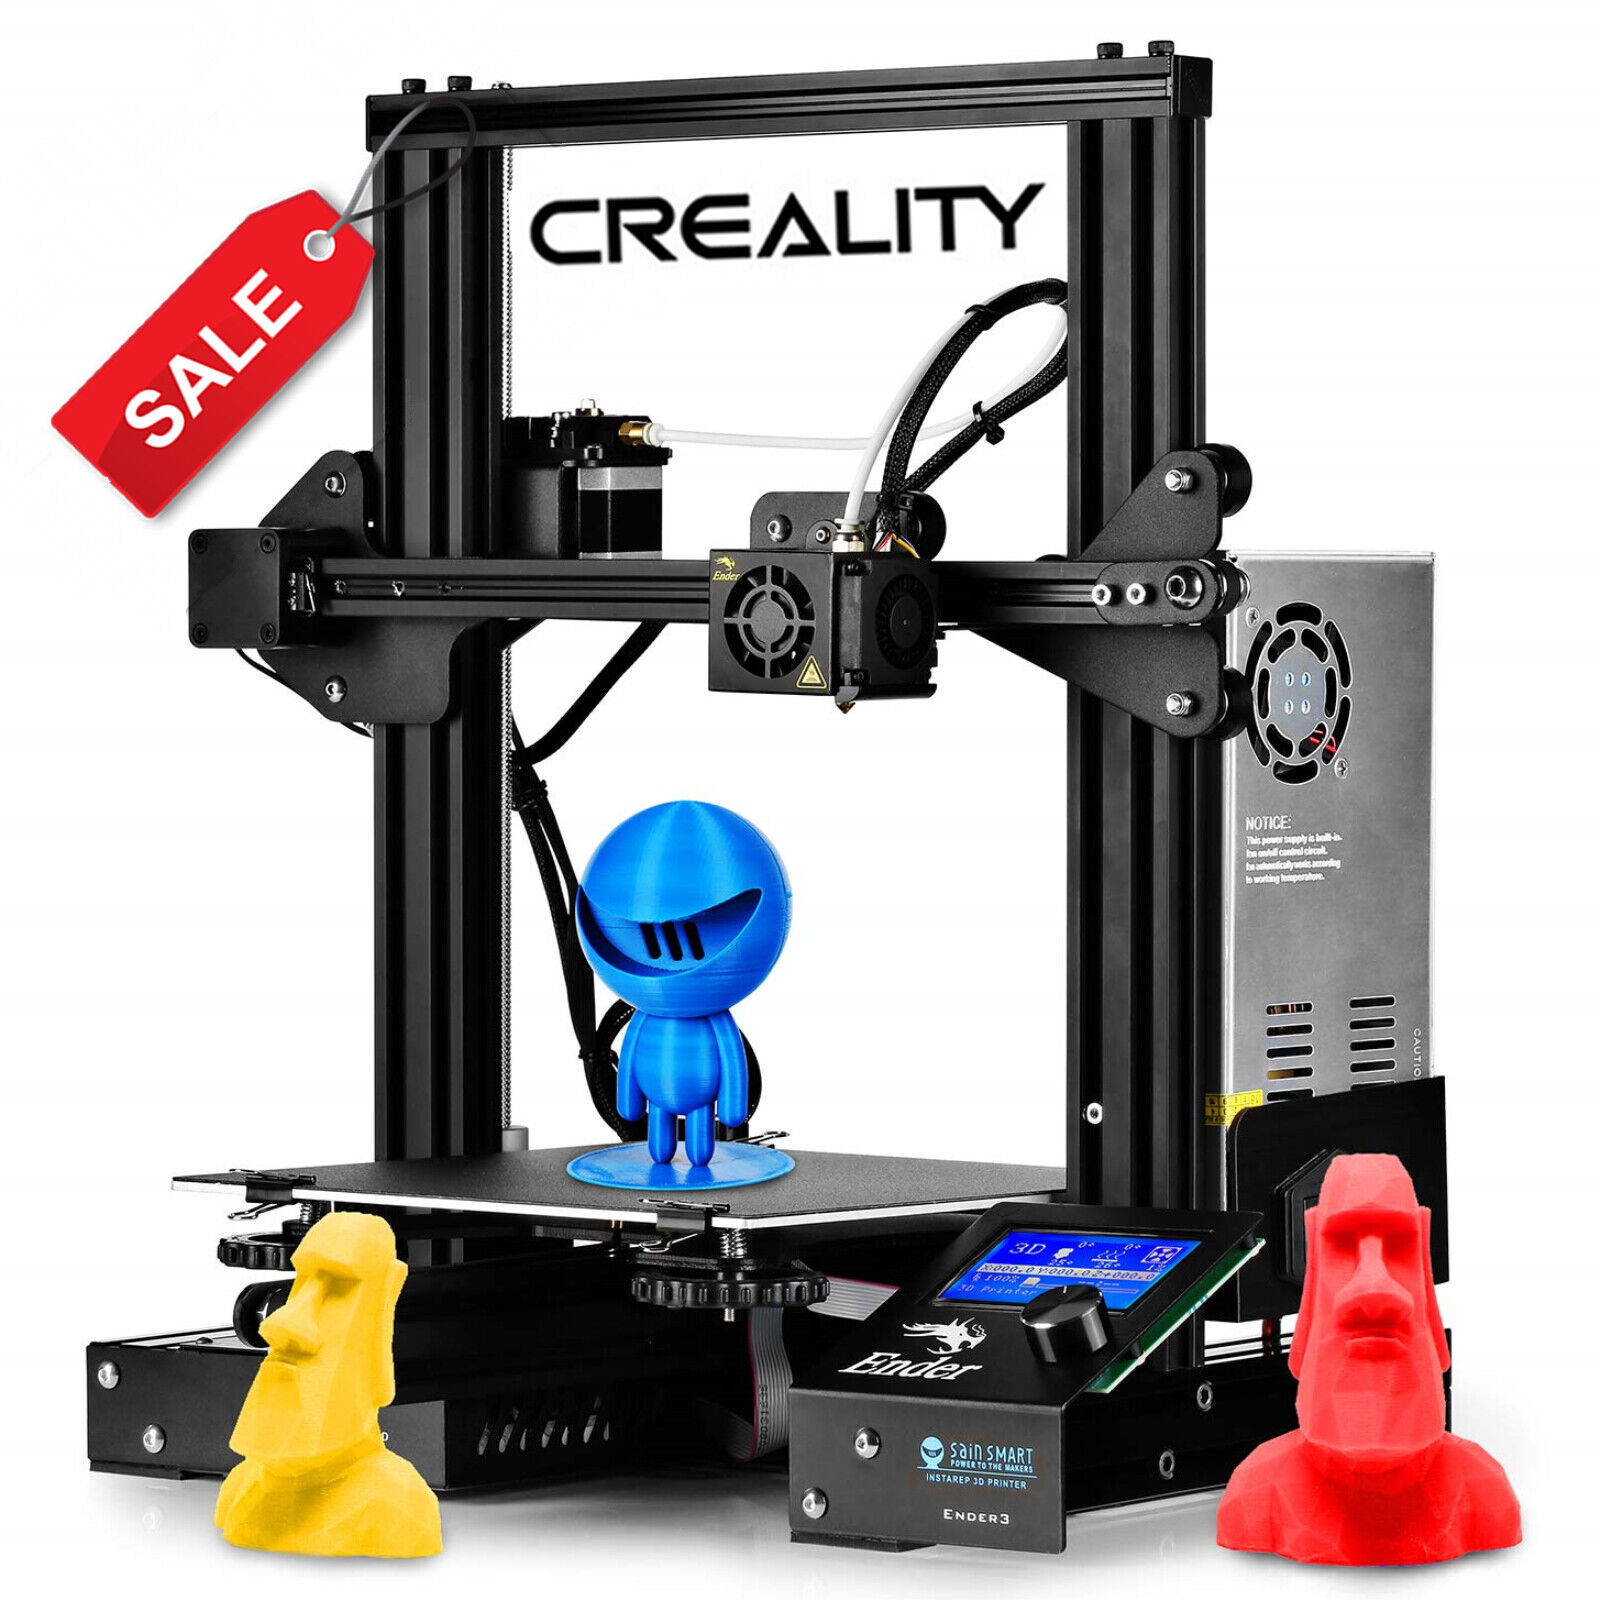 CREALITY 3D Printer OPEN-BOX DC 24V Original Parts & 1 year Warranty US